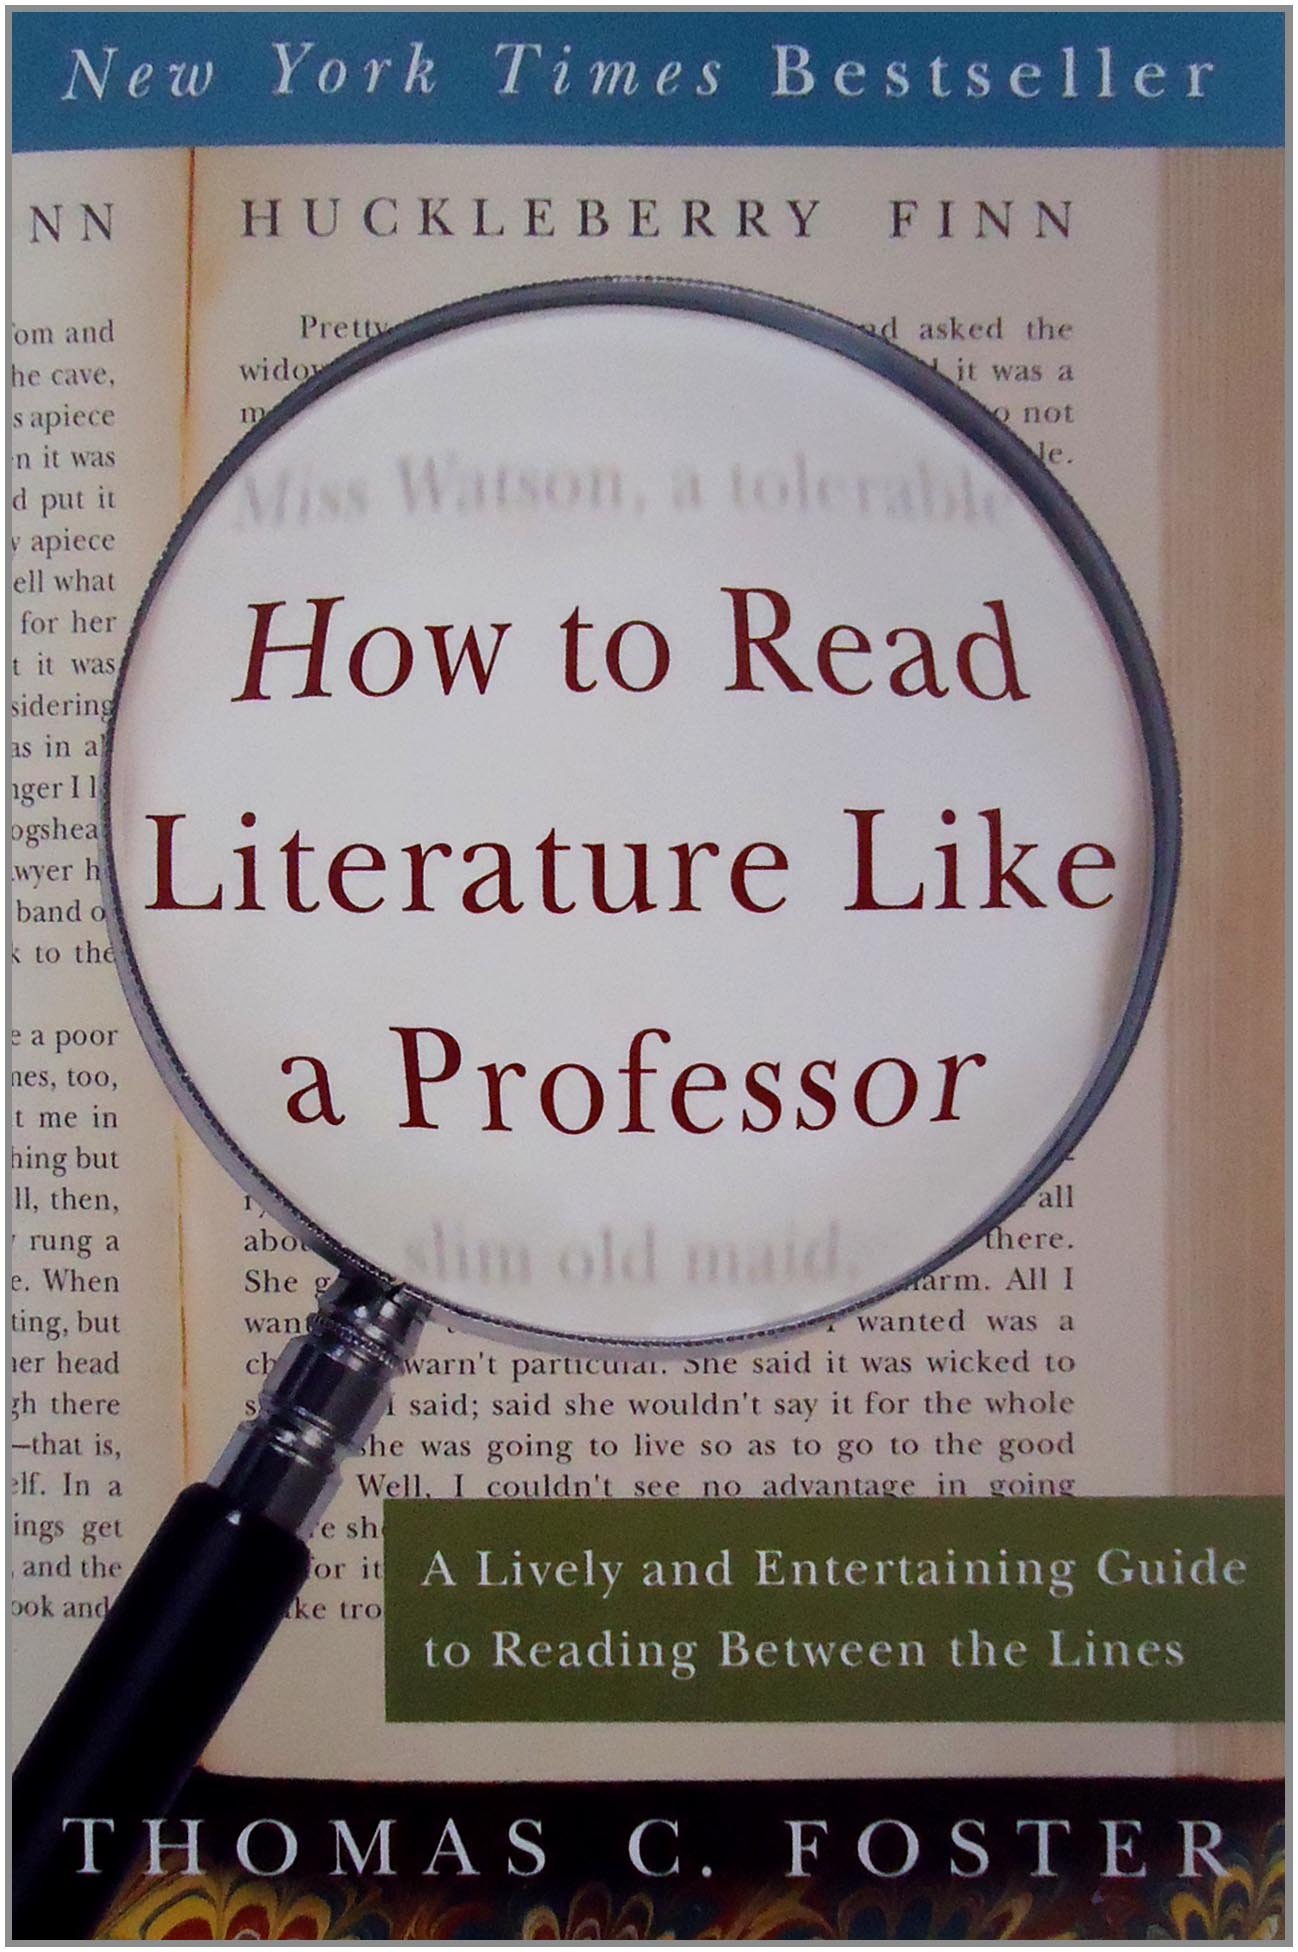 How to Read Literature Like A Professor Summary